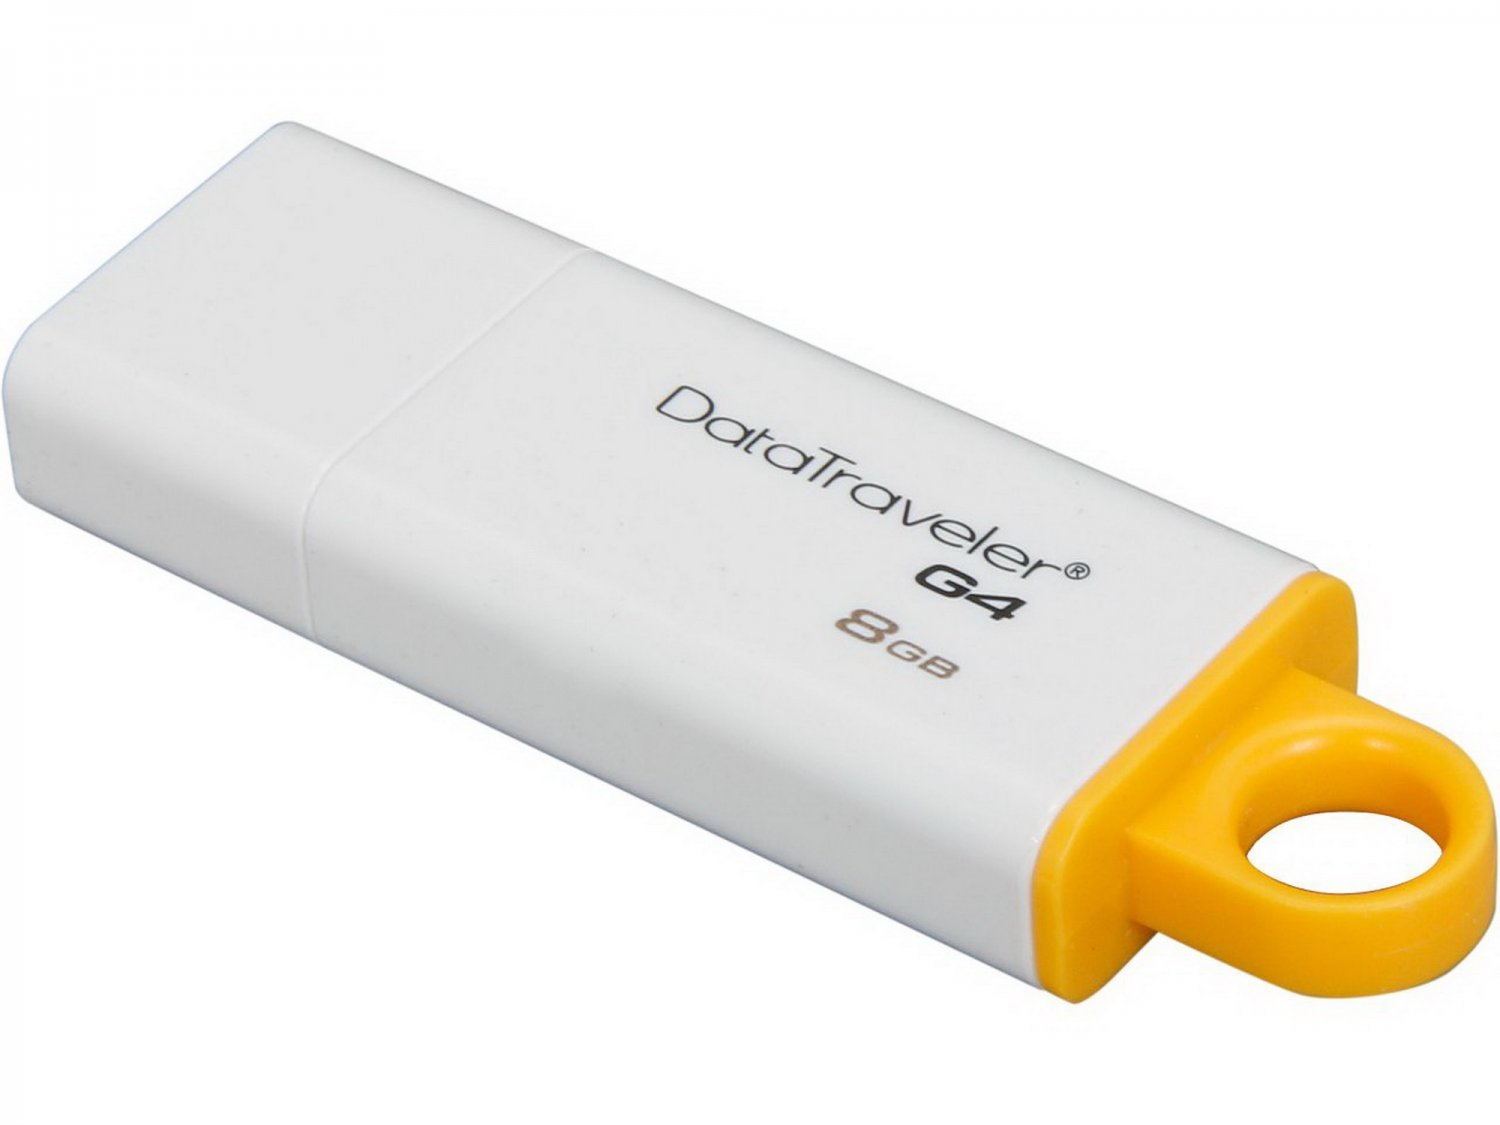 MEMORIA USB 3.0 DE 8GB KINGSTON DTIG4/8GB BLANCO/AMARILLO  - DTIG4/8GB